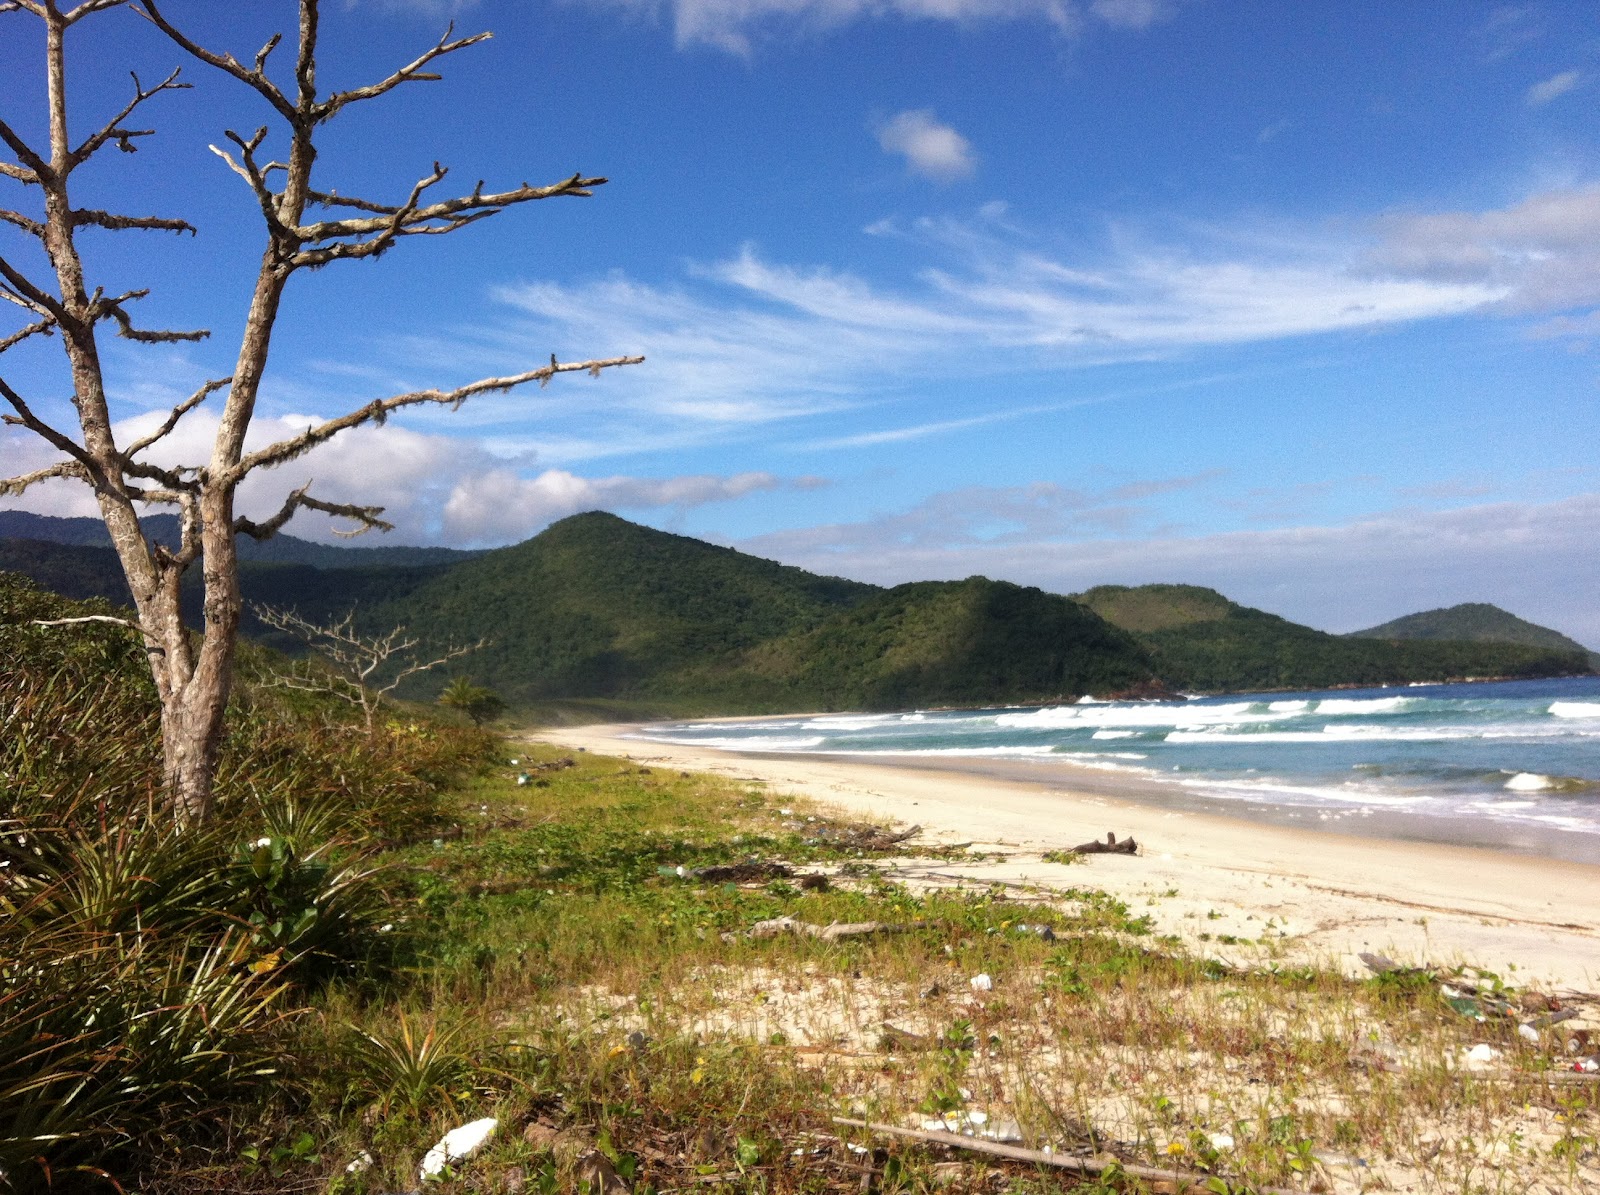 Photo of Praia do Leste located in natural area